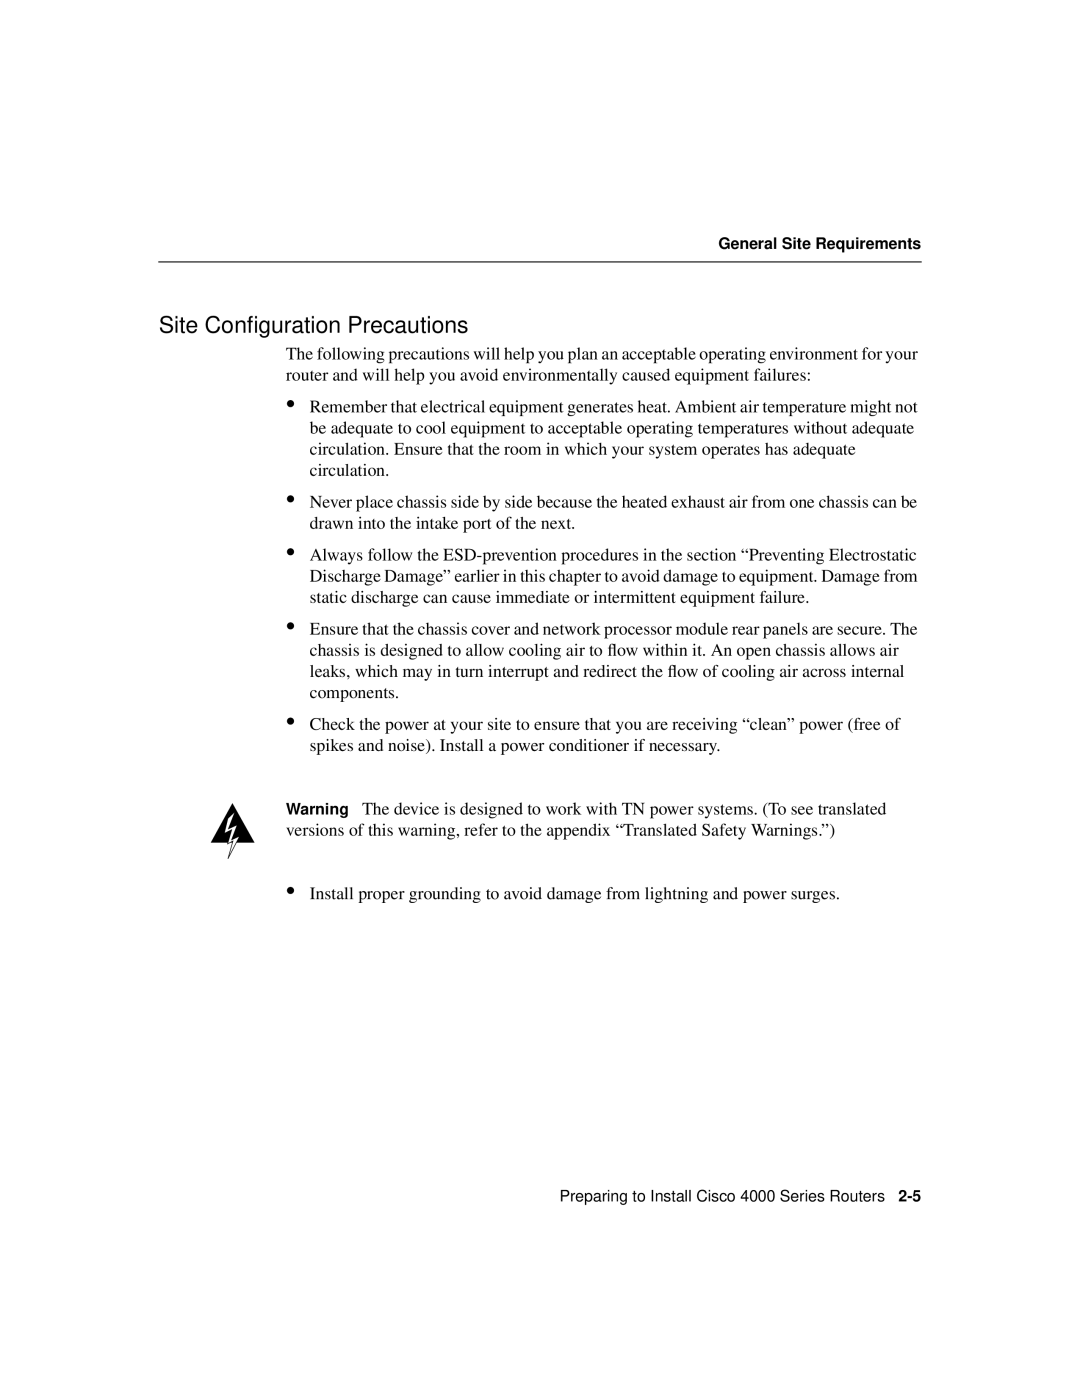 Cisco Systems 4000 appendix Site Conﬁguration Precautions 